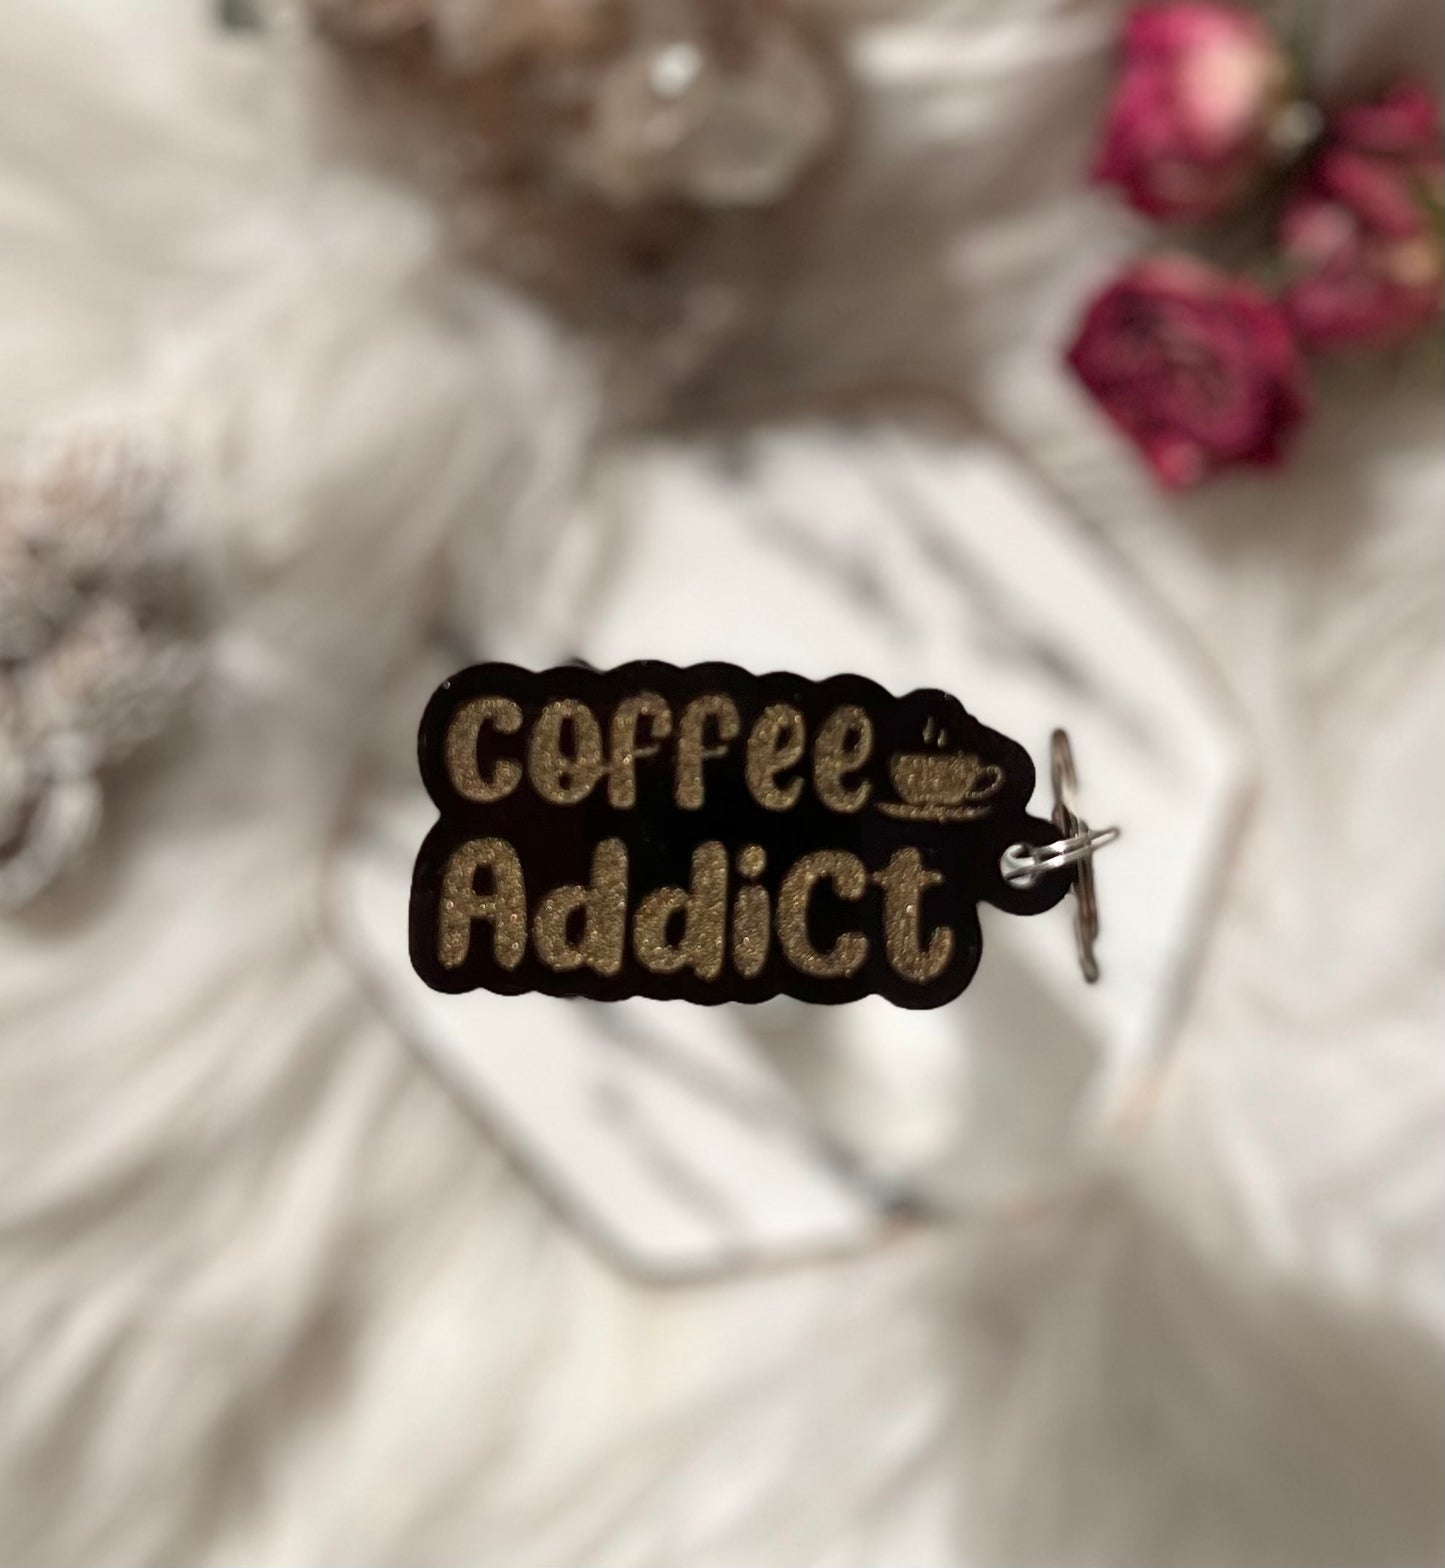 Coffee addict keychains